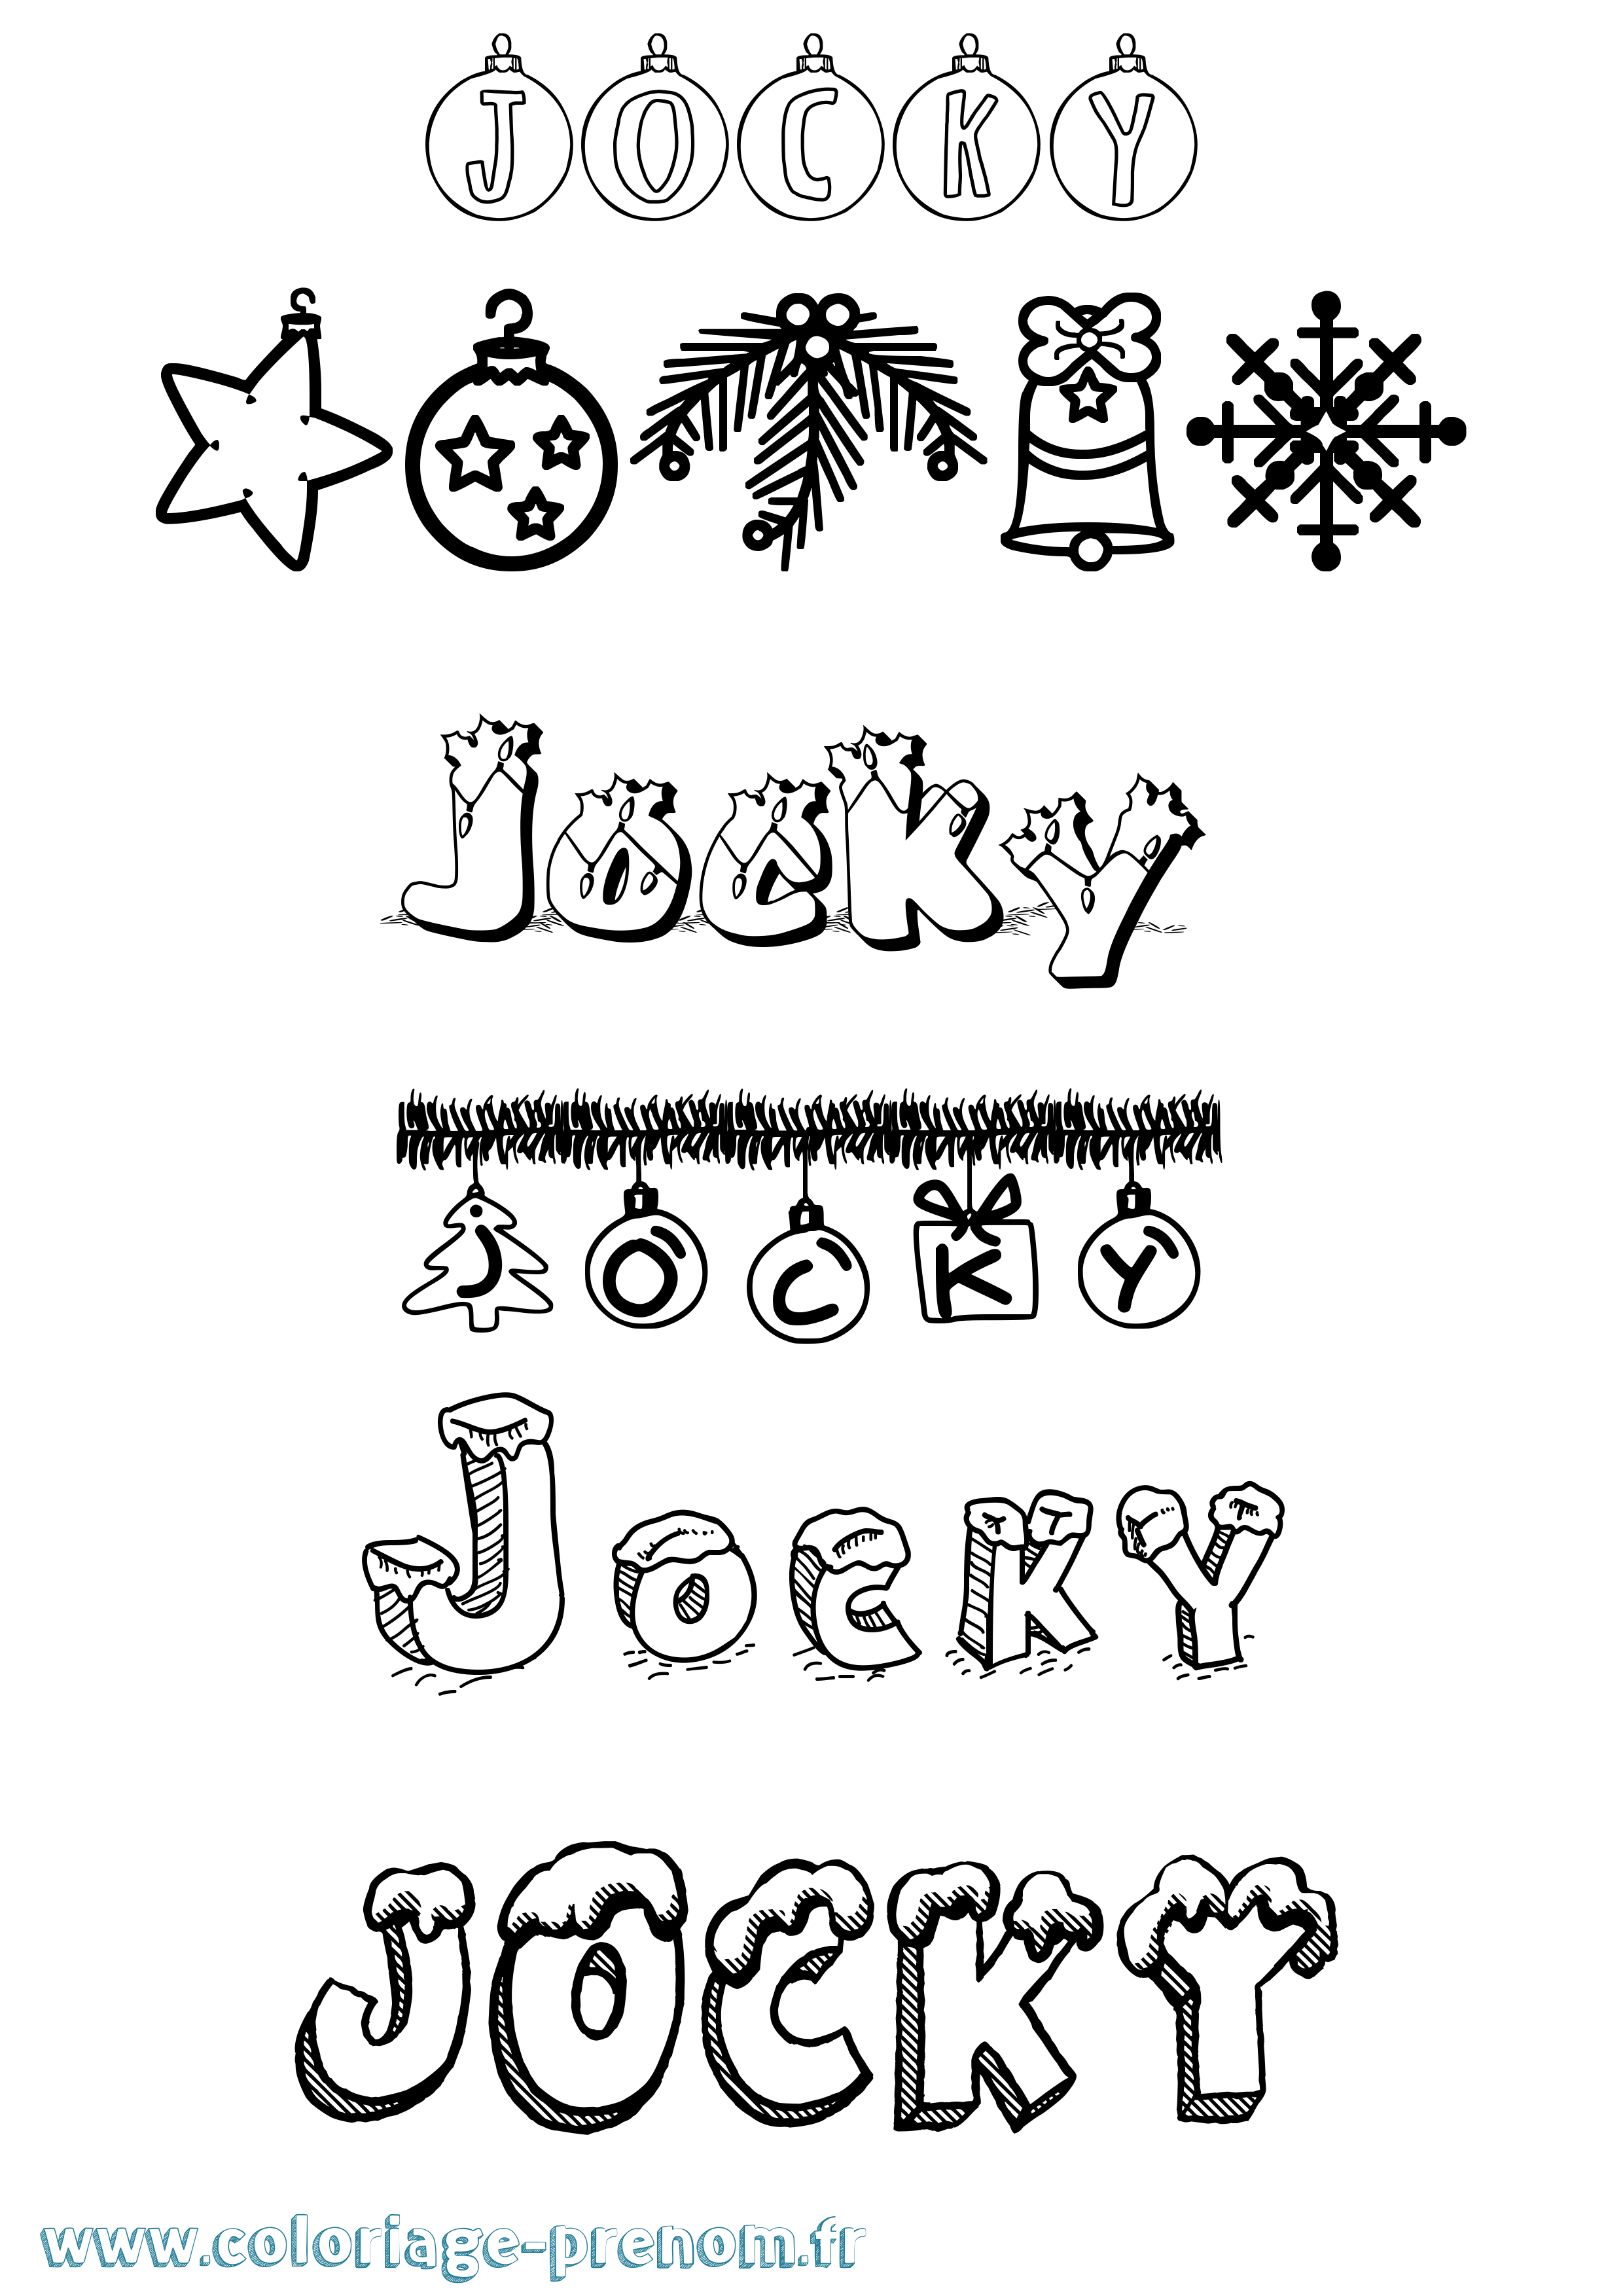 Coloriage prénom Jocky Noël